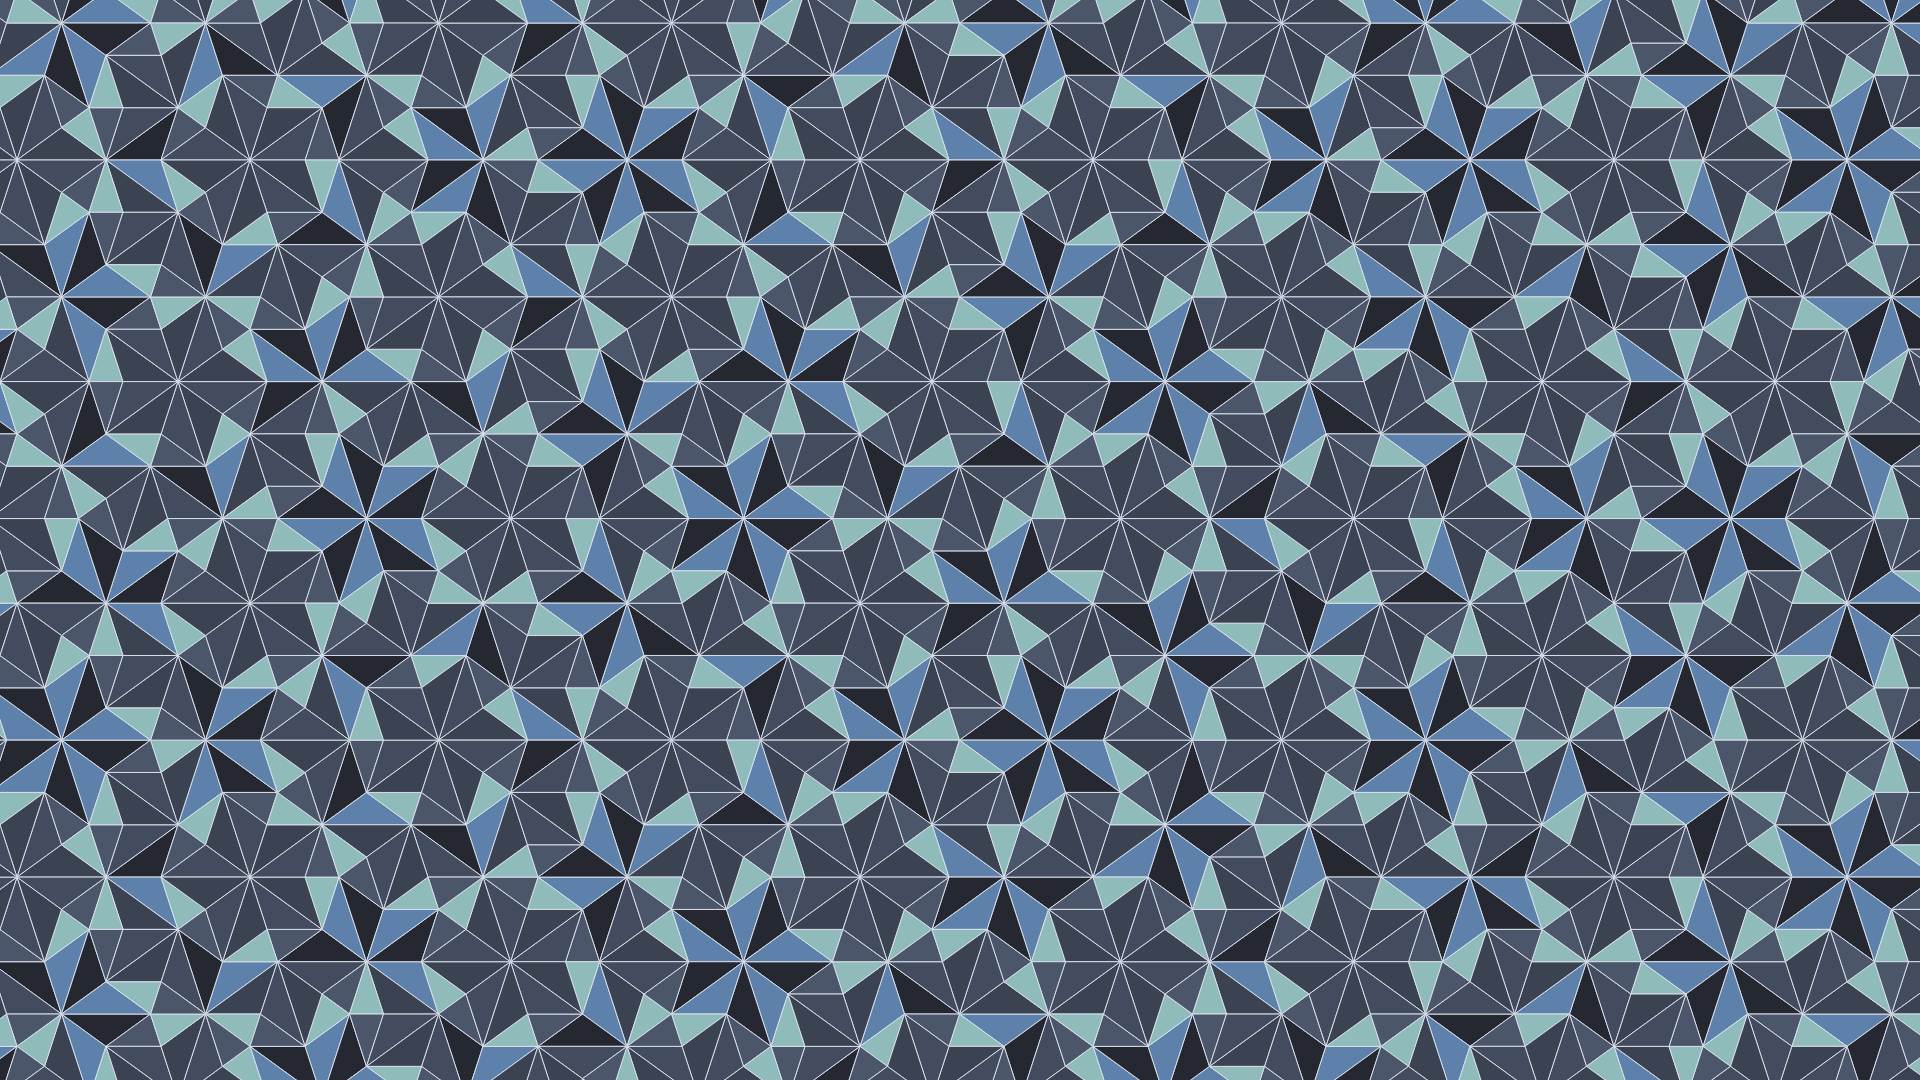 Mosaic Penrose Tiling Abstract Digital Art 1920x1080